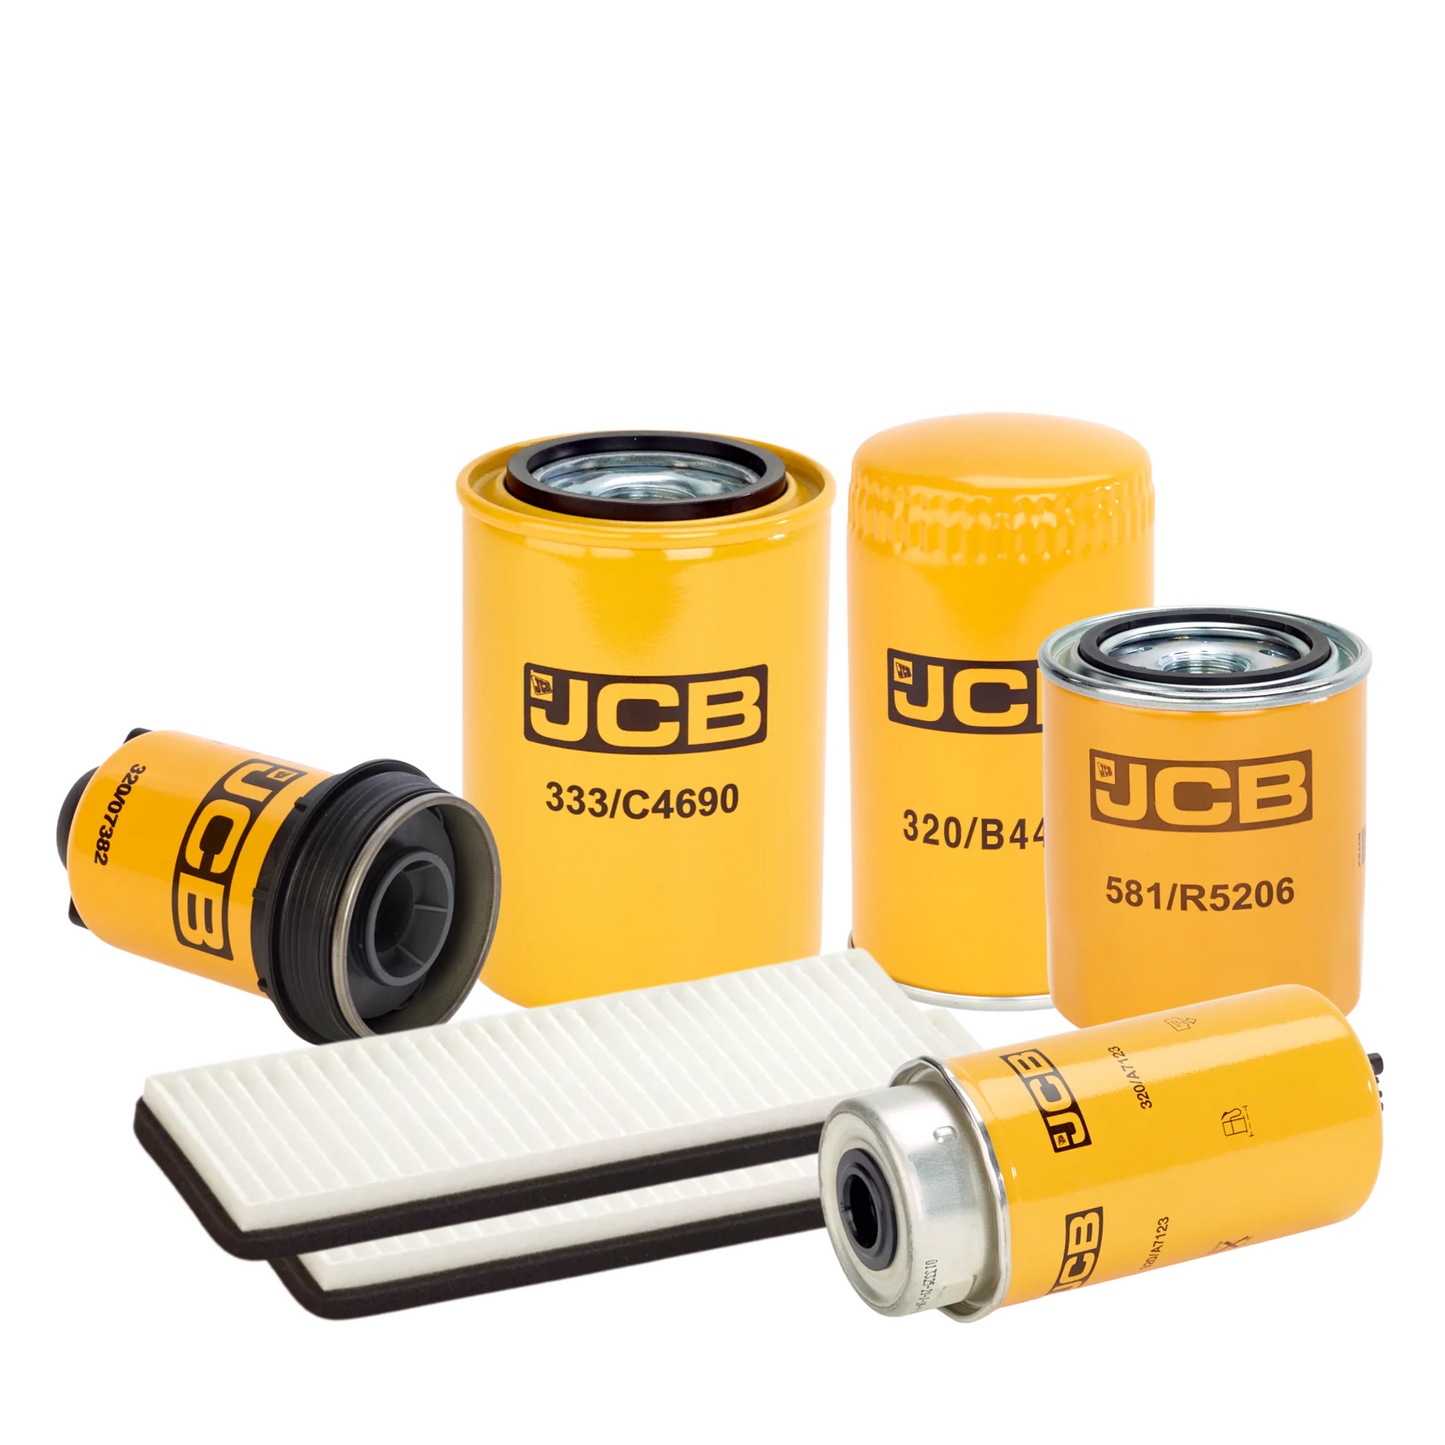 JCB 535-140 4500 Hour Filter Service Kit